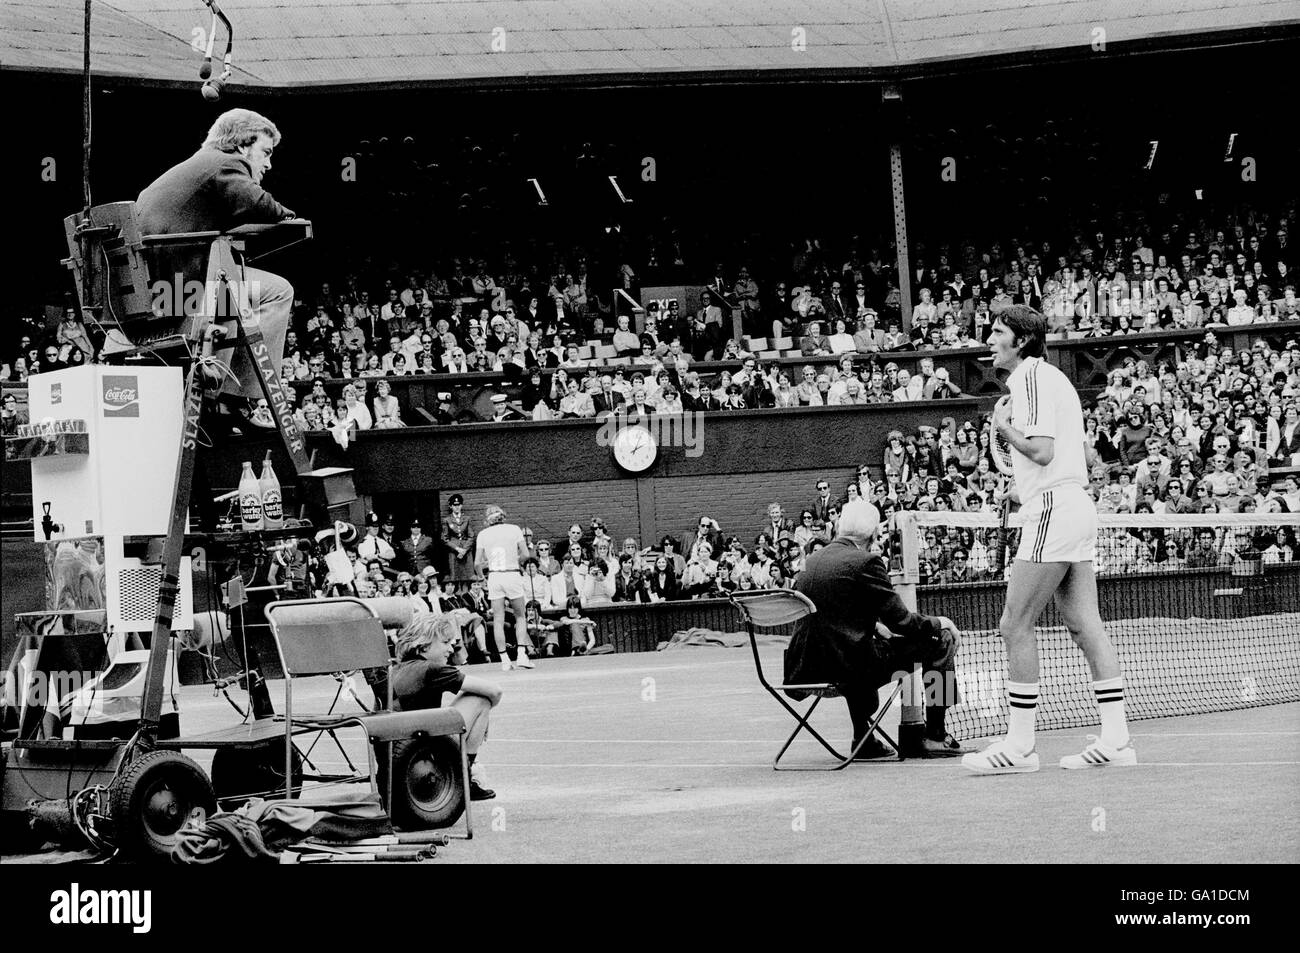 Tennis - Wimbledon Meisterschaften 1977 - Ilie Nastase V Bjorn Borg Stockfoto